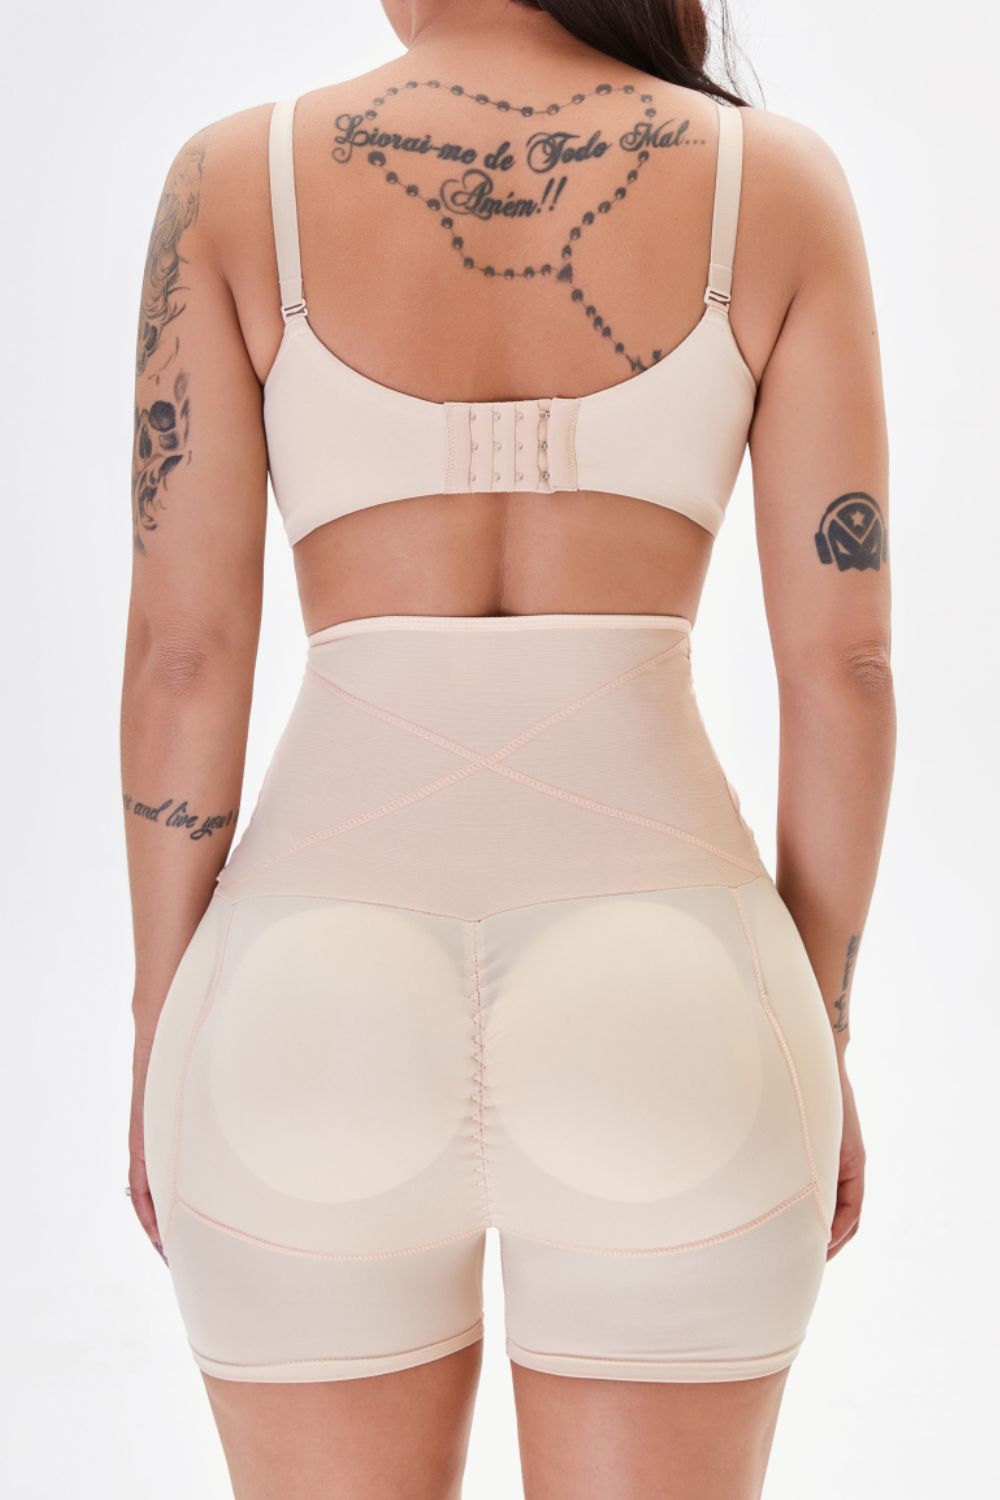 Full Size Hip Lifting Shaping Shorts - BloomBliss.com